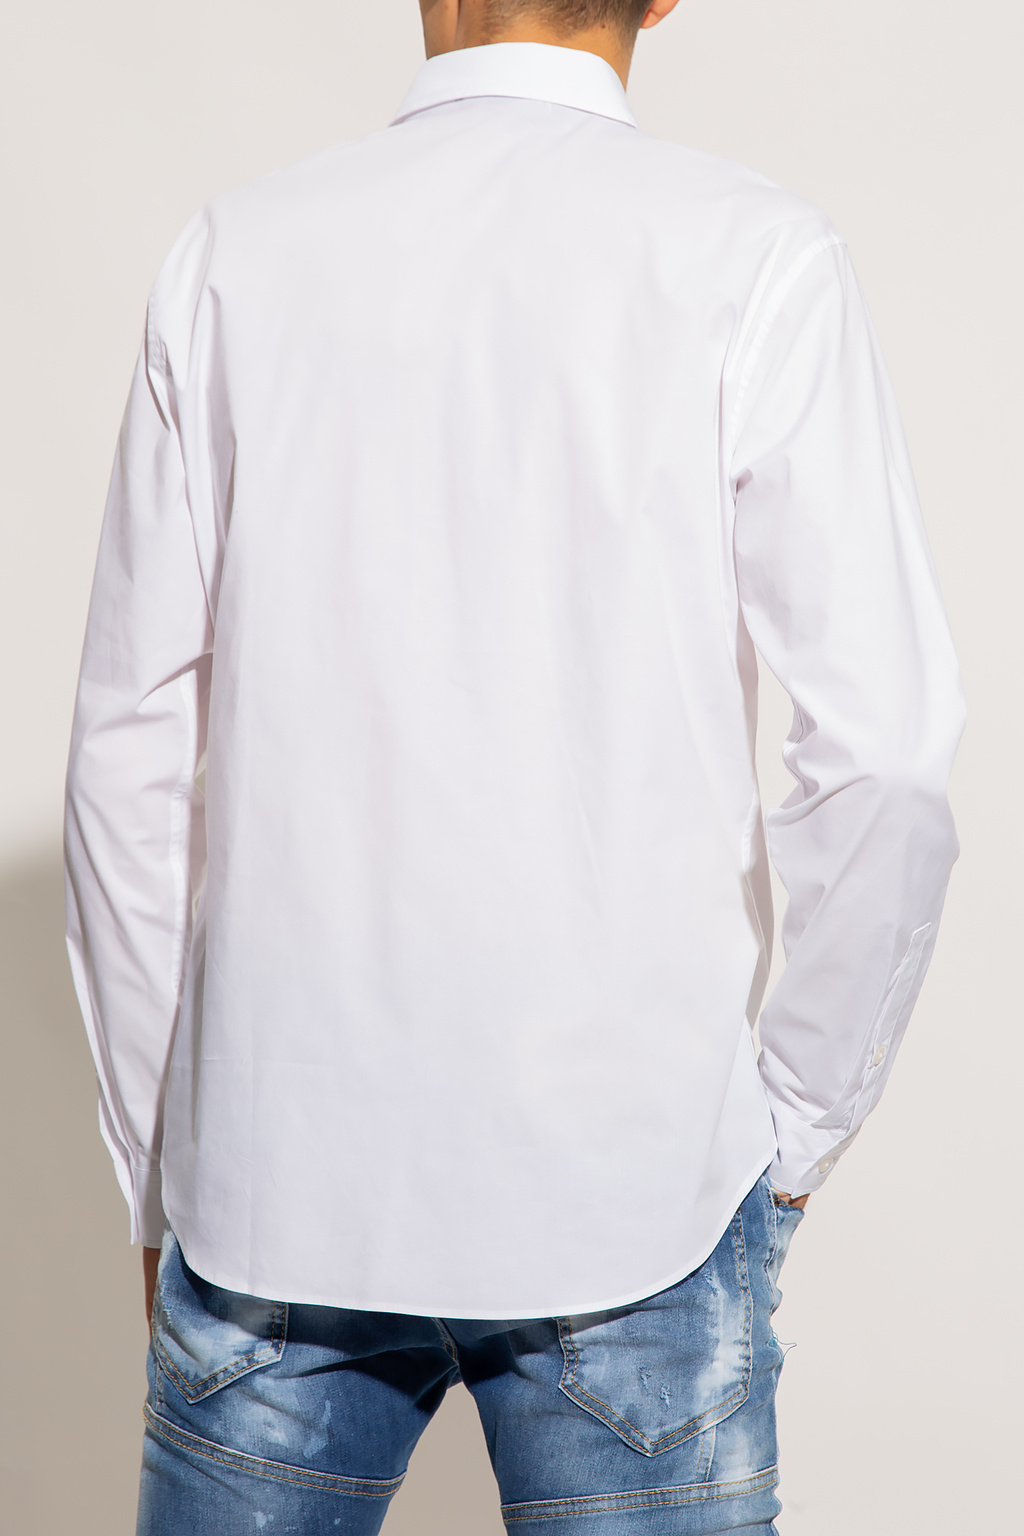 adidas Men's Linear Foil T-Shirt The Seth Stripe Linen Shirt from